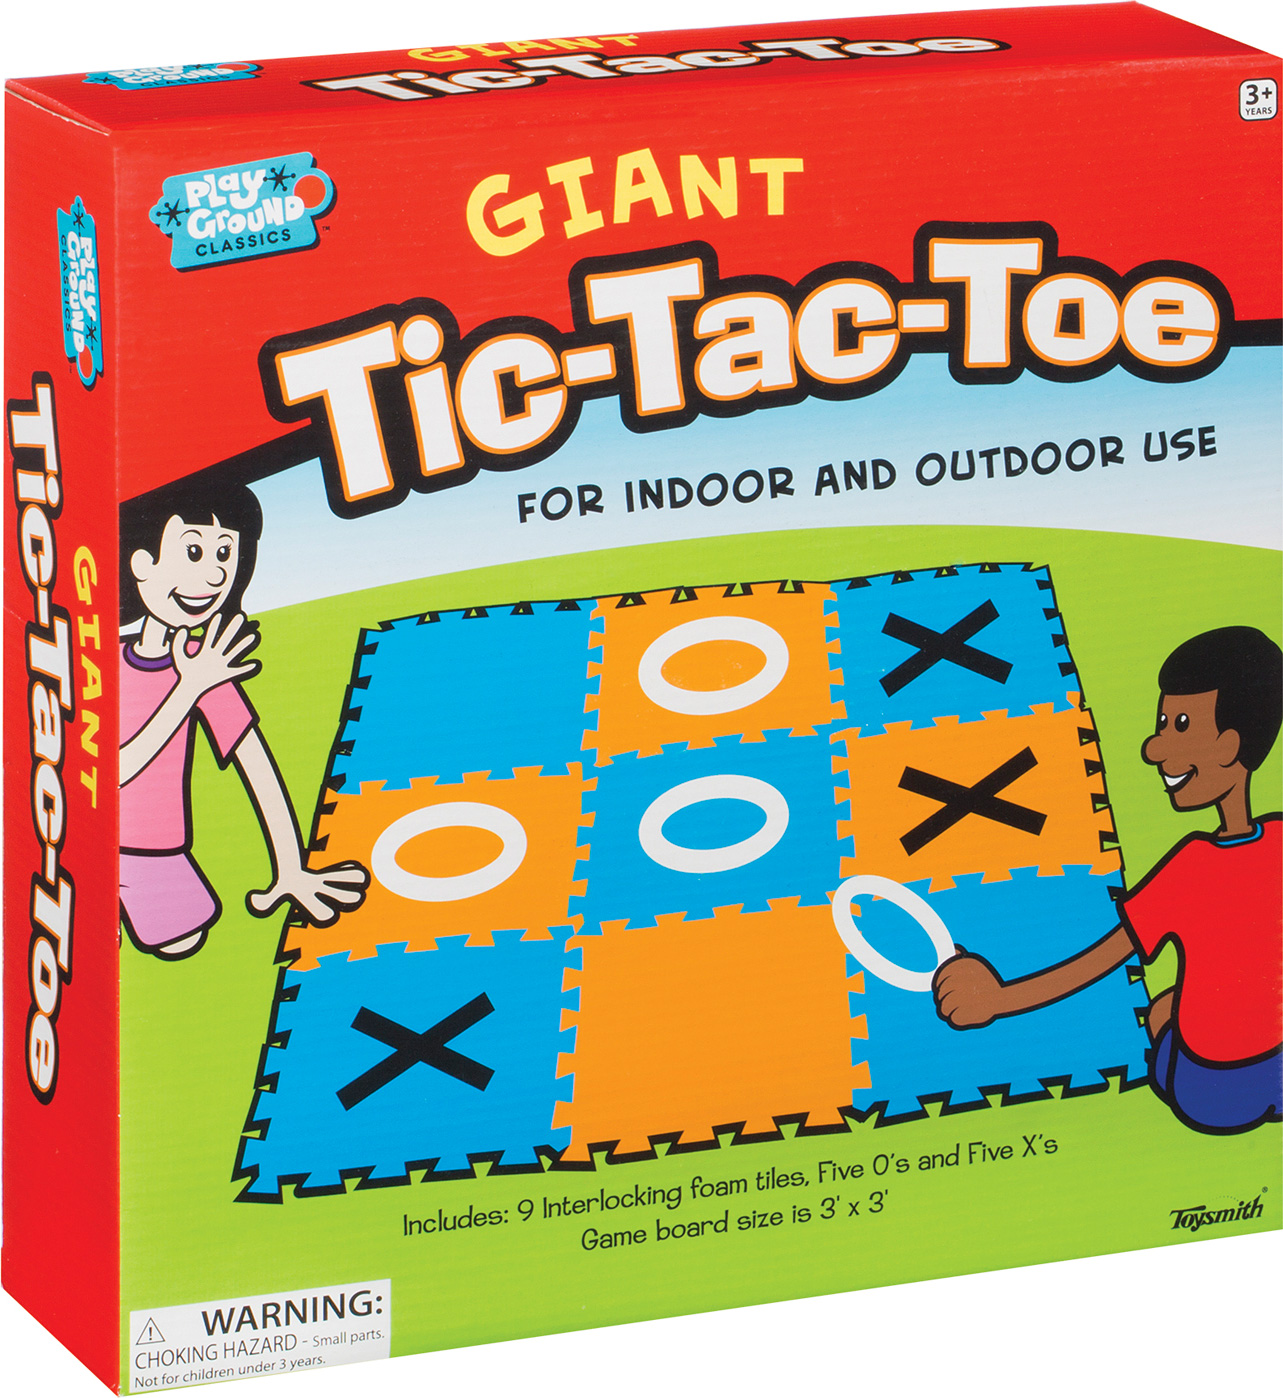 Tic Tac Toe (Bulk Pack of 24) 5x5 Foam Tic-Tac-Toe Mini Board